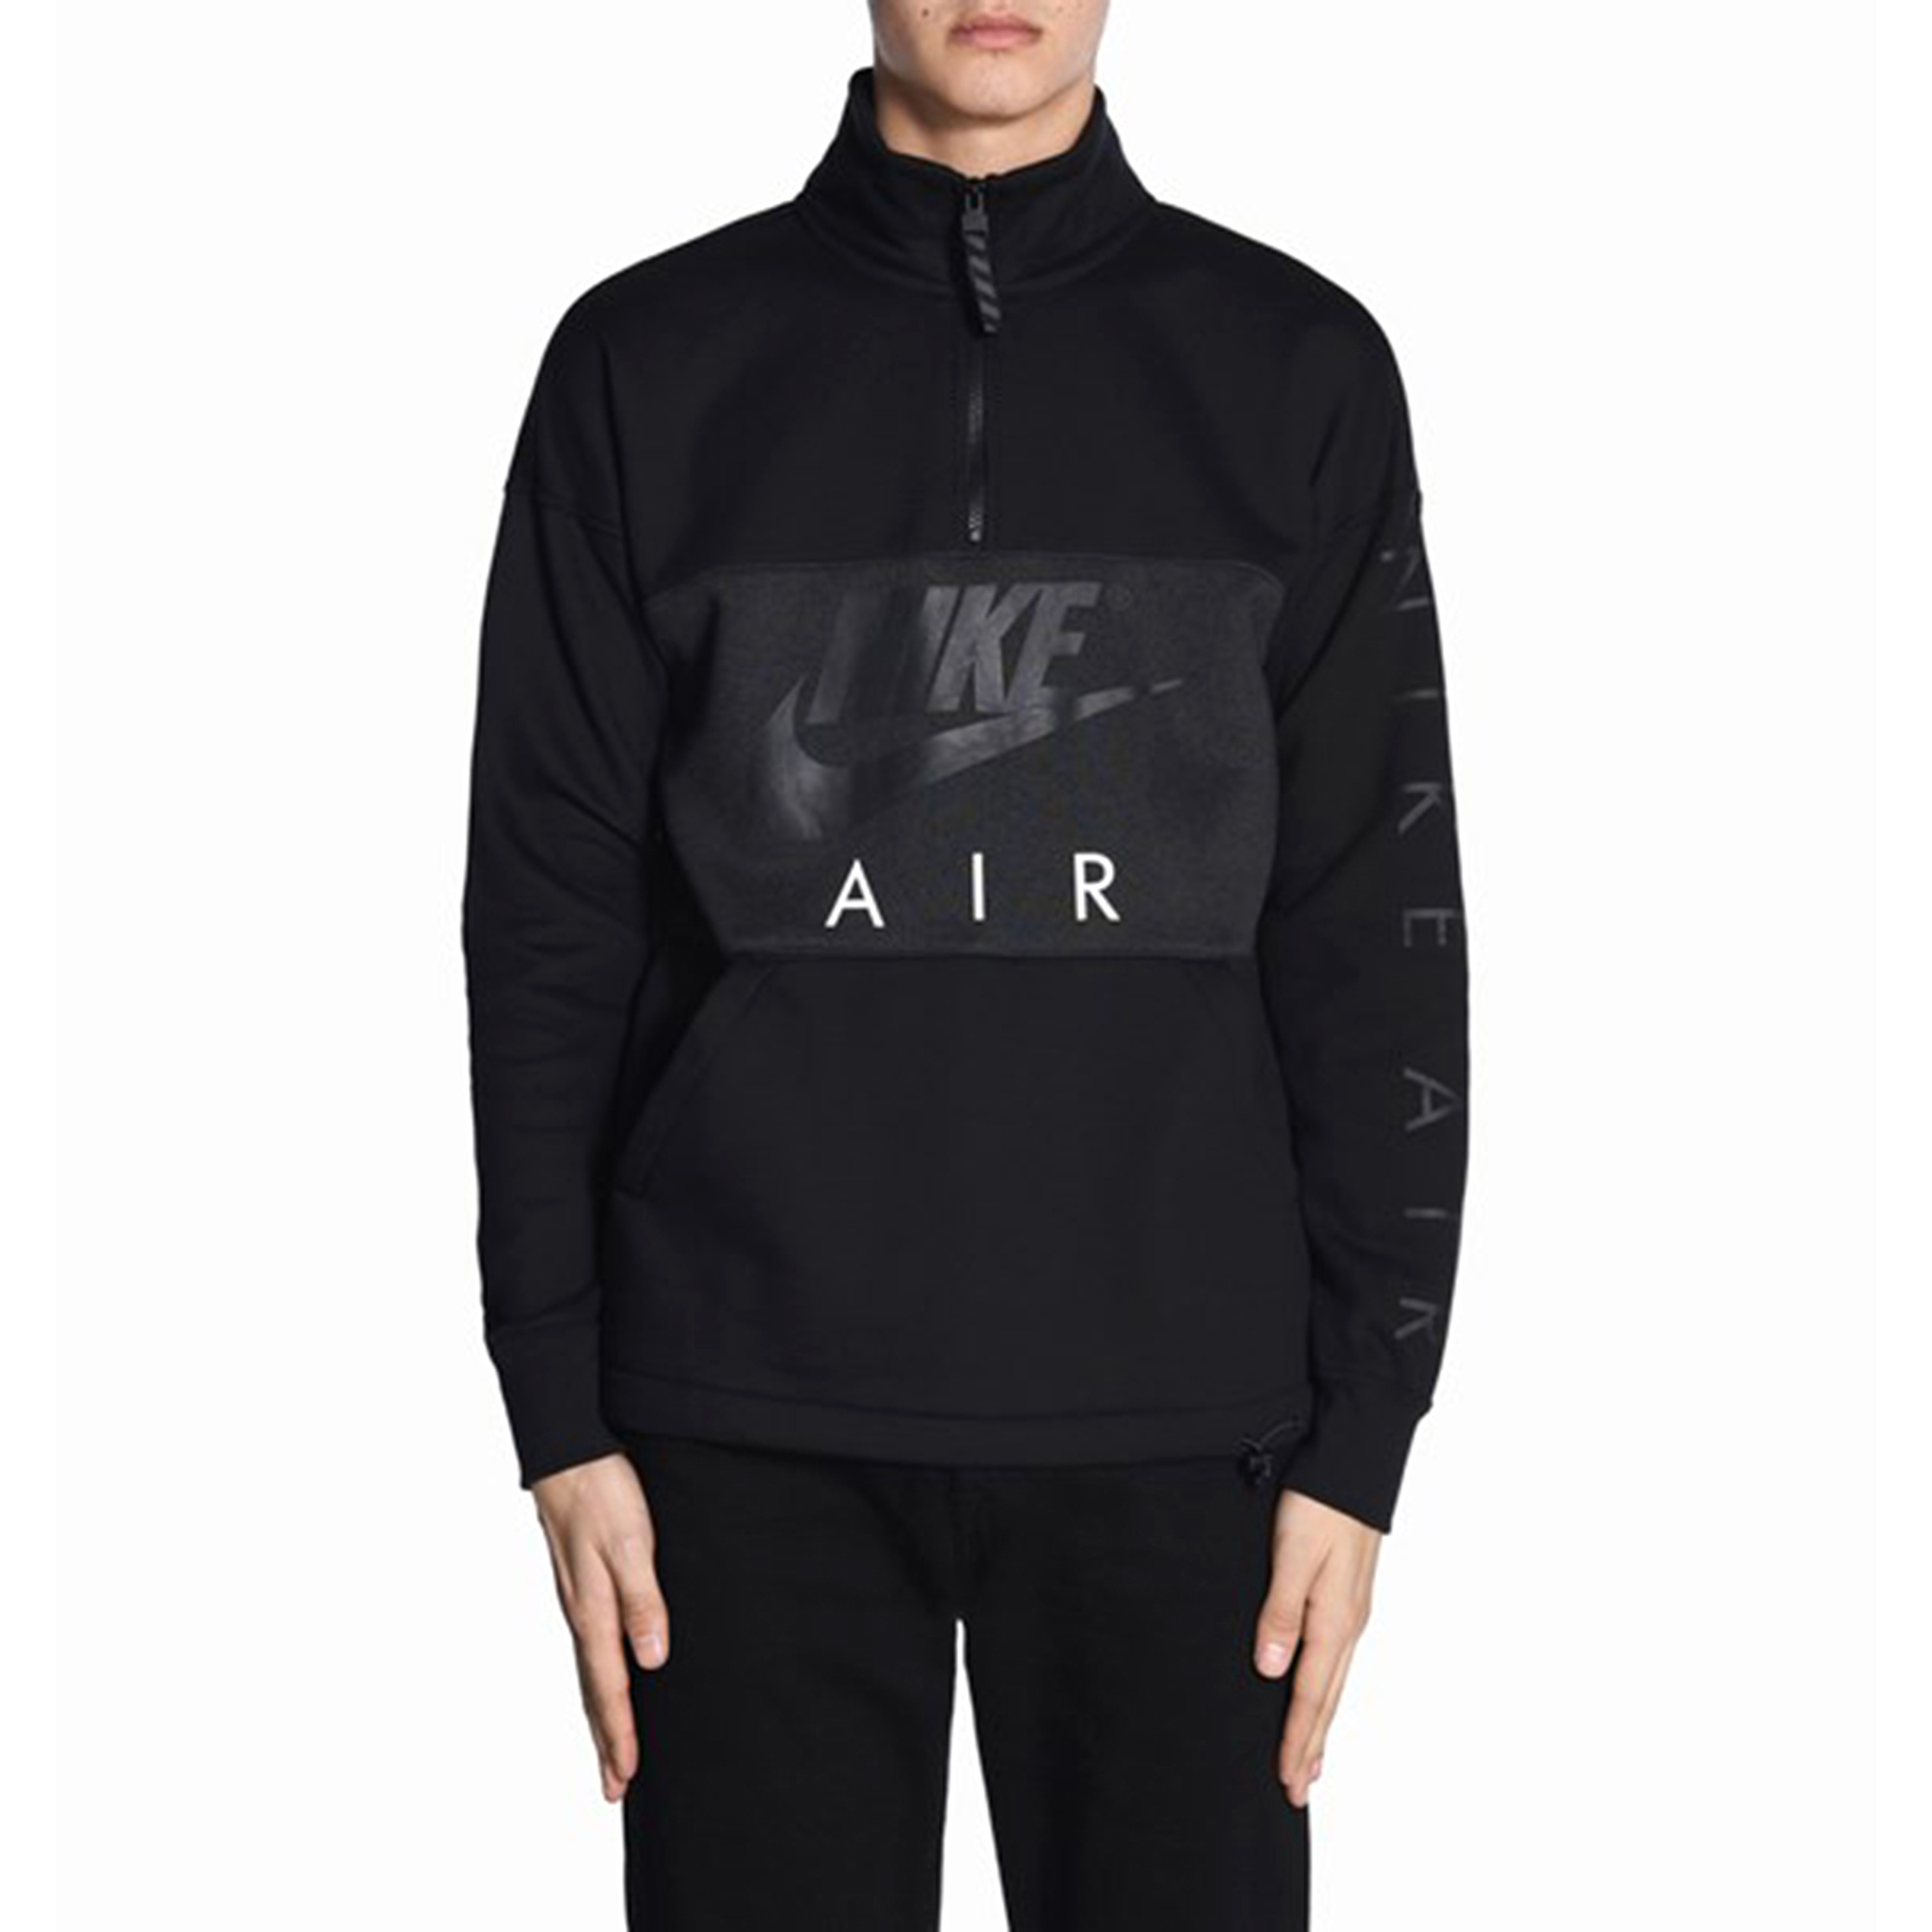 Nike Air Sportswear Men's Half Zip 